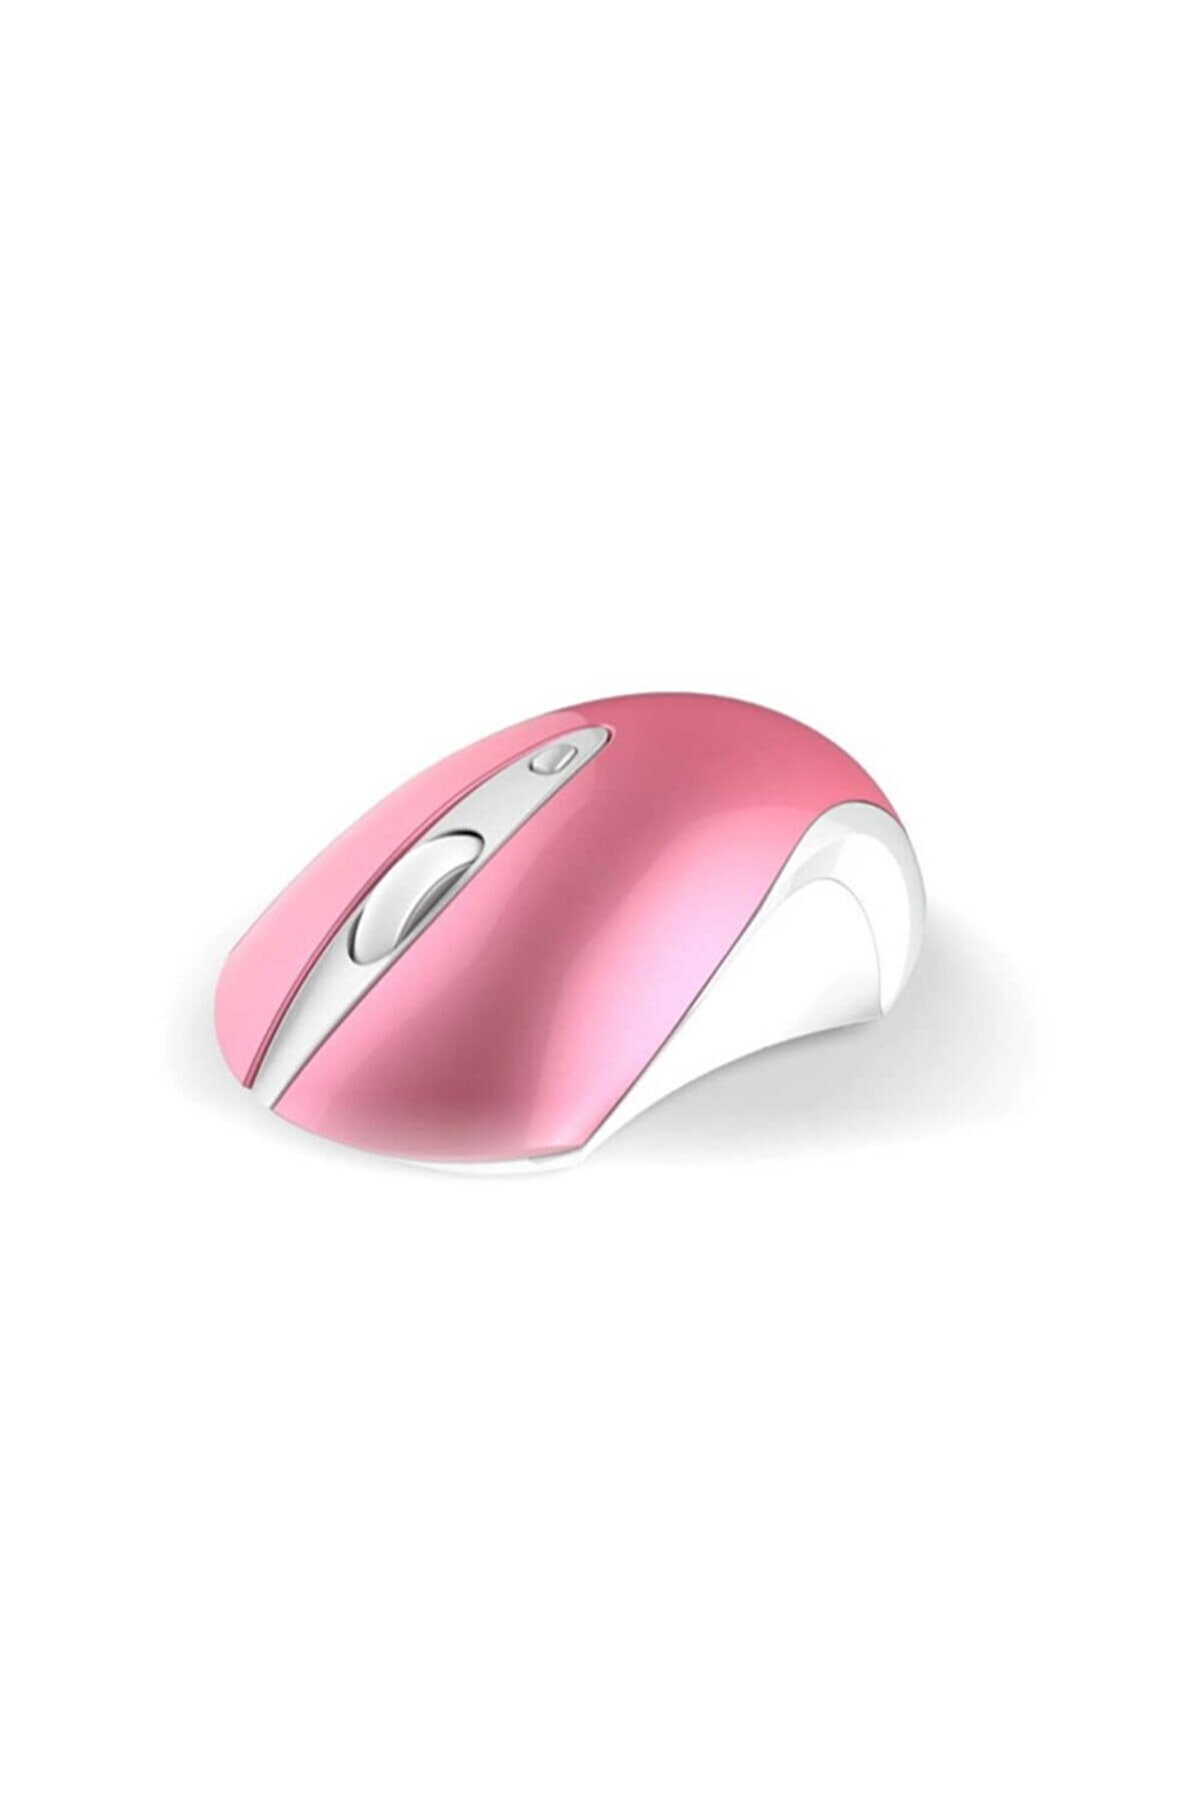 WOZLO G-189 Kablosuz Mouse Mute Silent Sessiz Optik Wireless Mouse